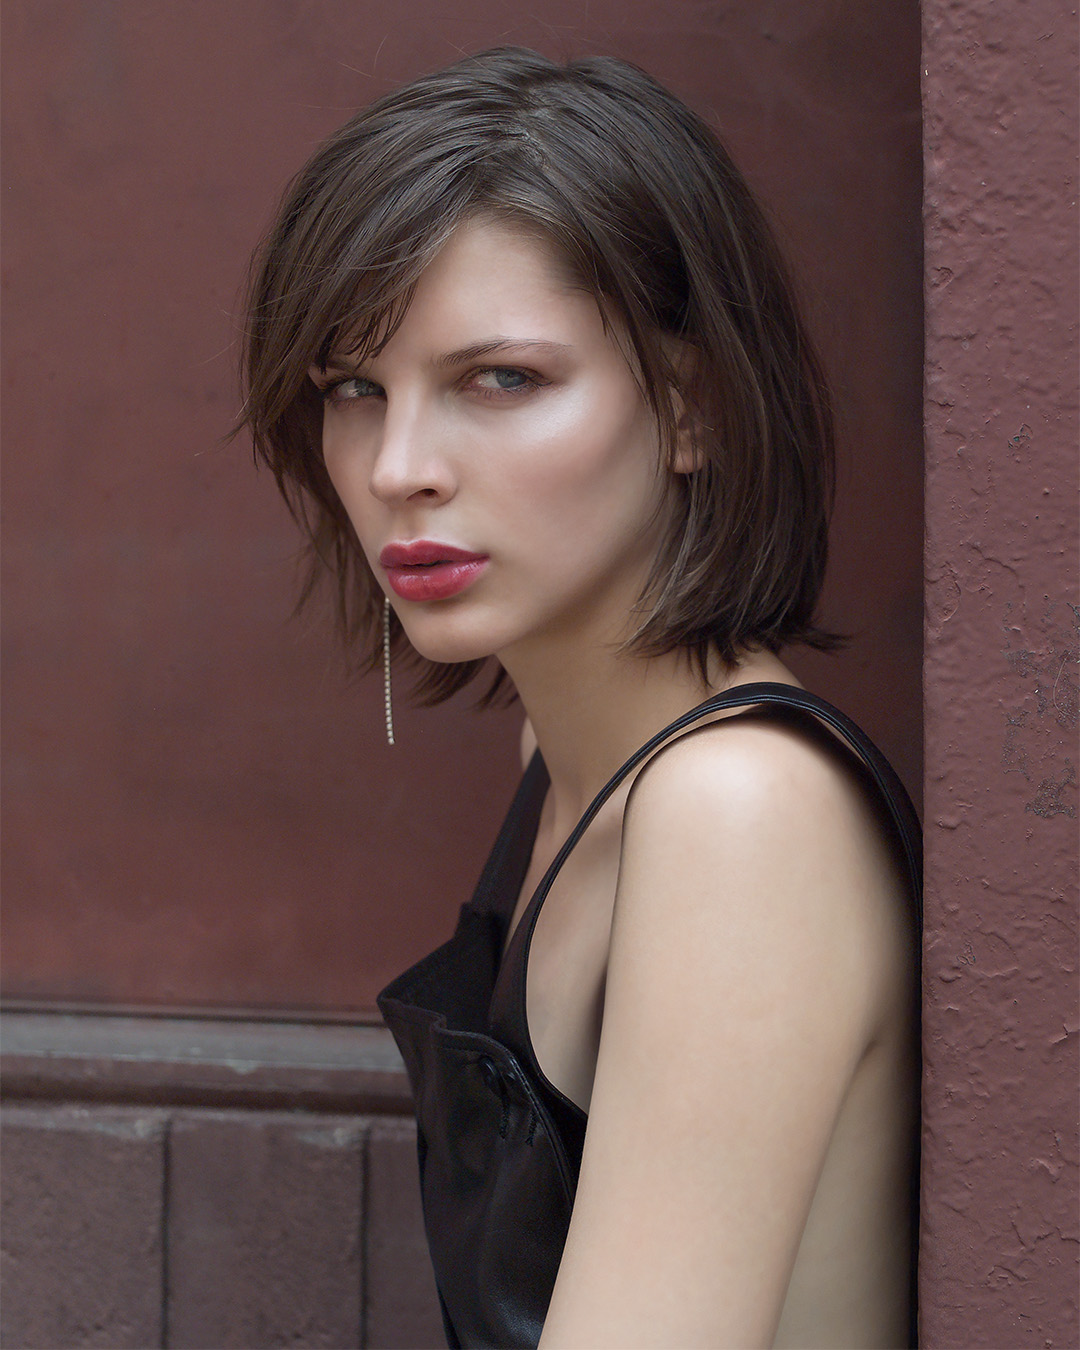 Model+Agota+Varga+photographed+by+Patrik+Andersson+downtown+NYC+fashion+shoot.jpeg